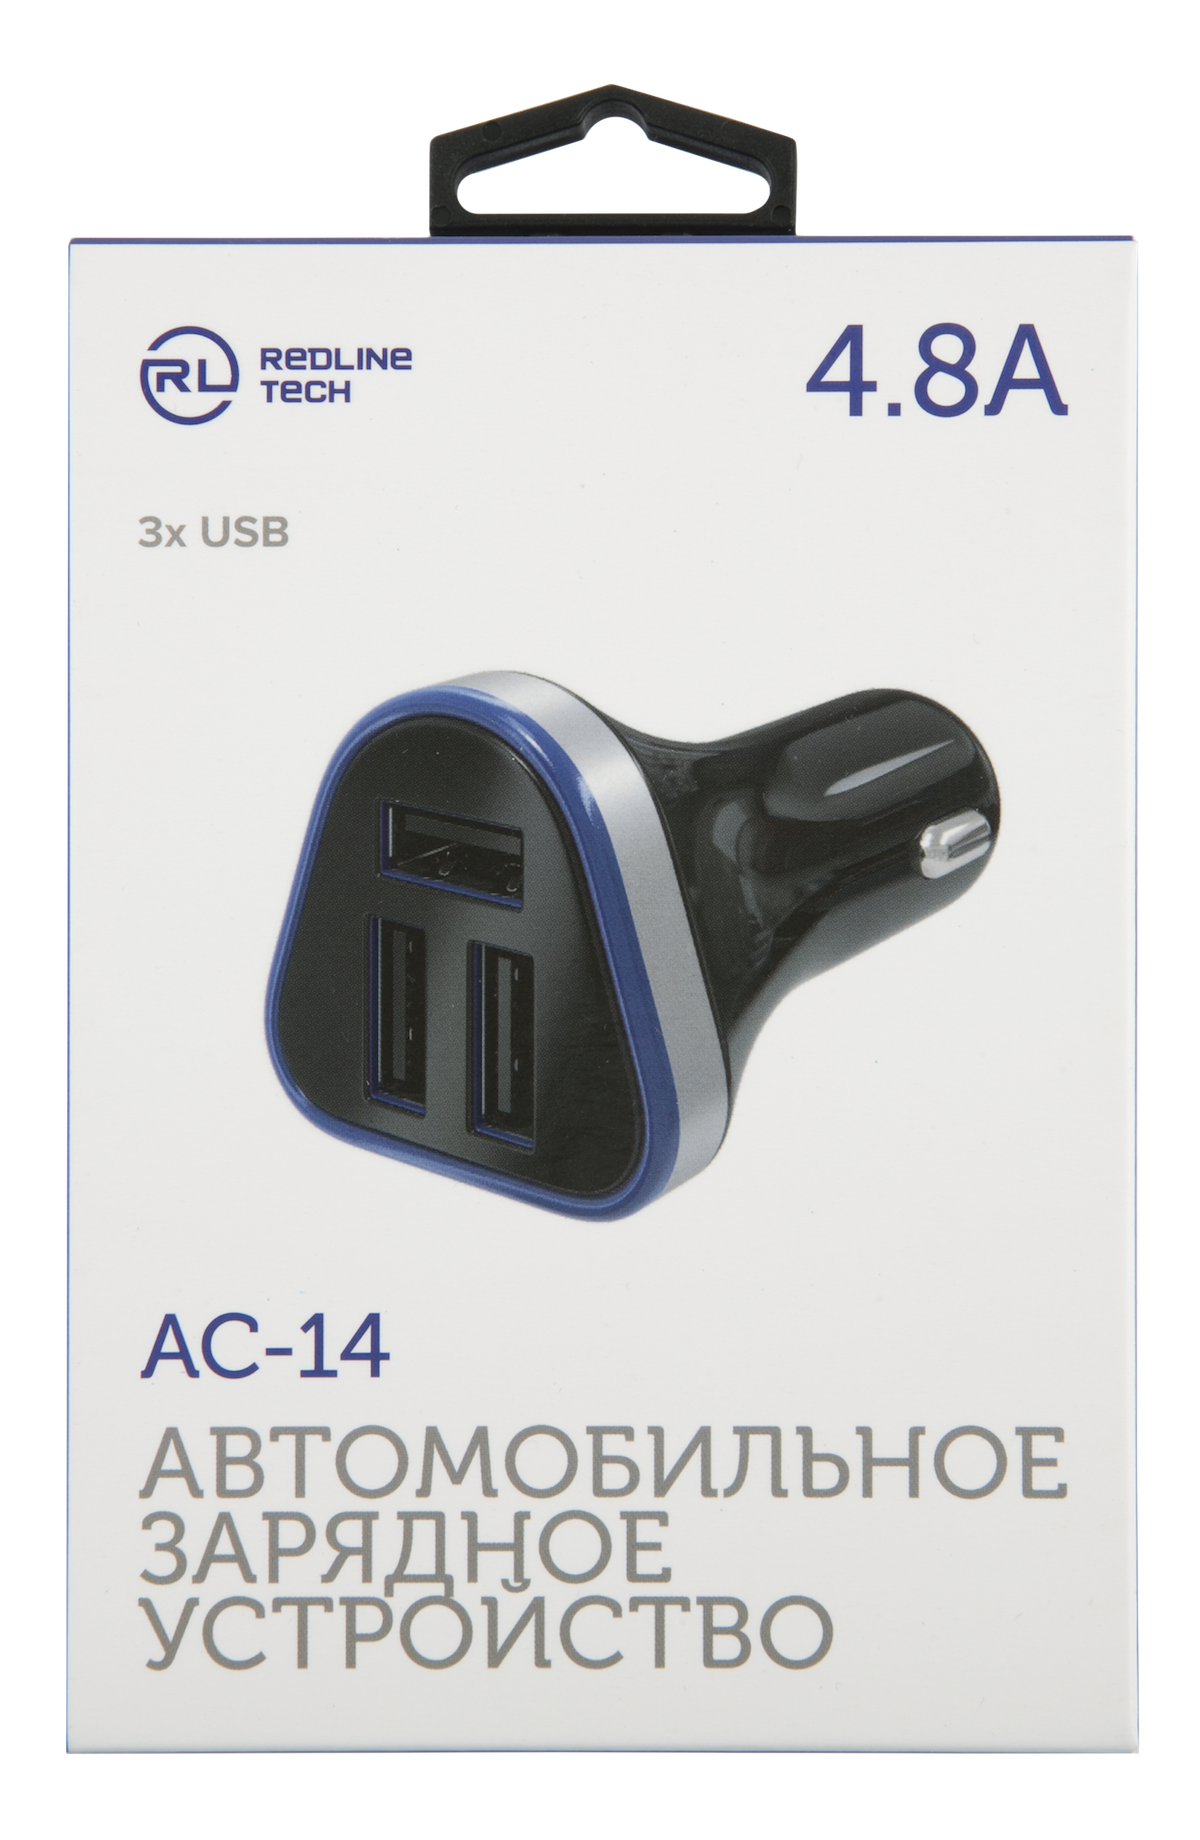 АЗУ Red Line Tech 3 USB (модель AC-14)